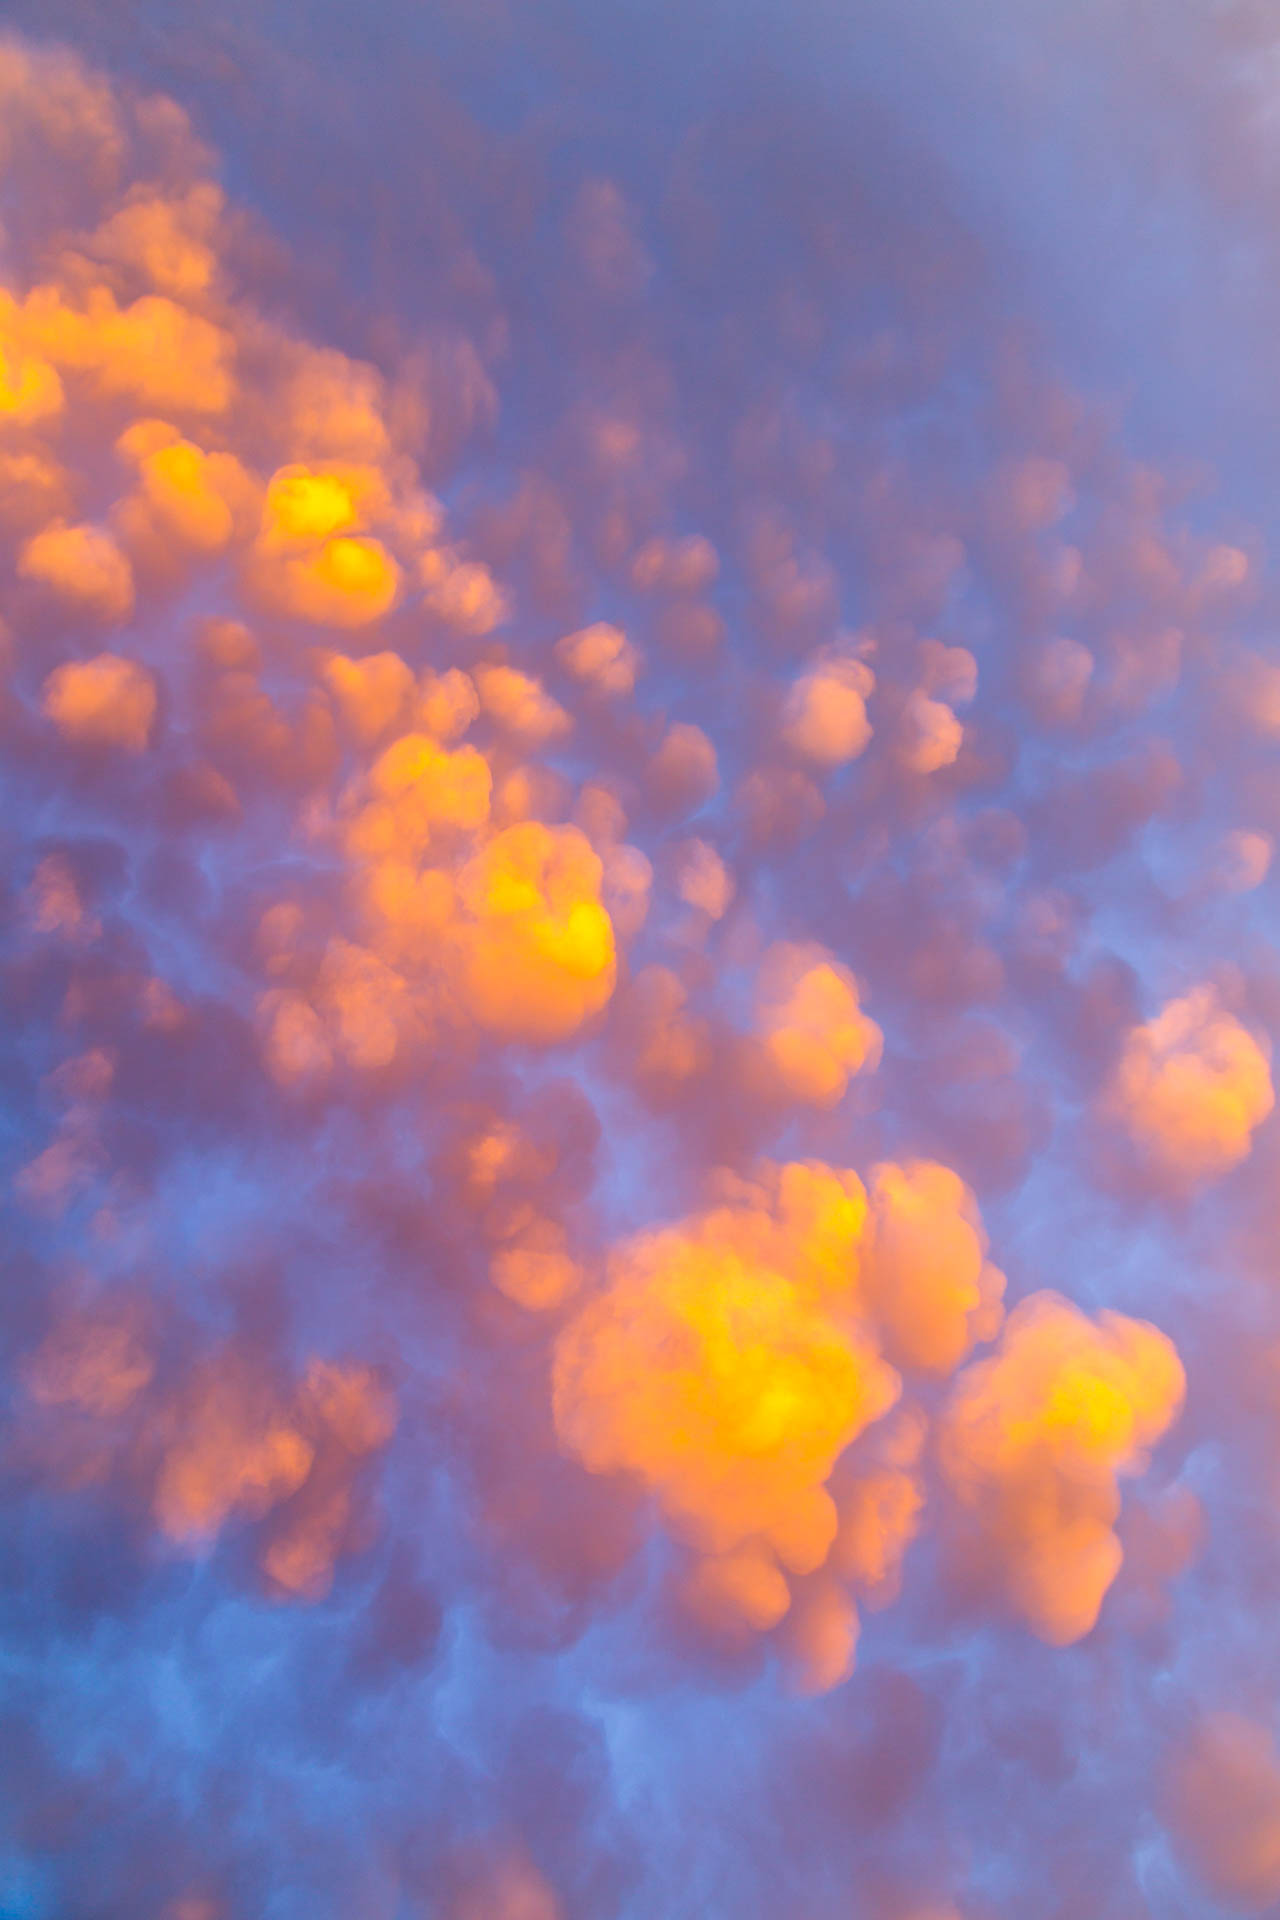 Clouds balls